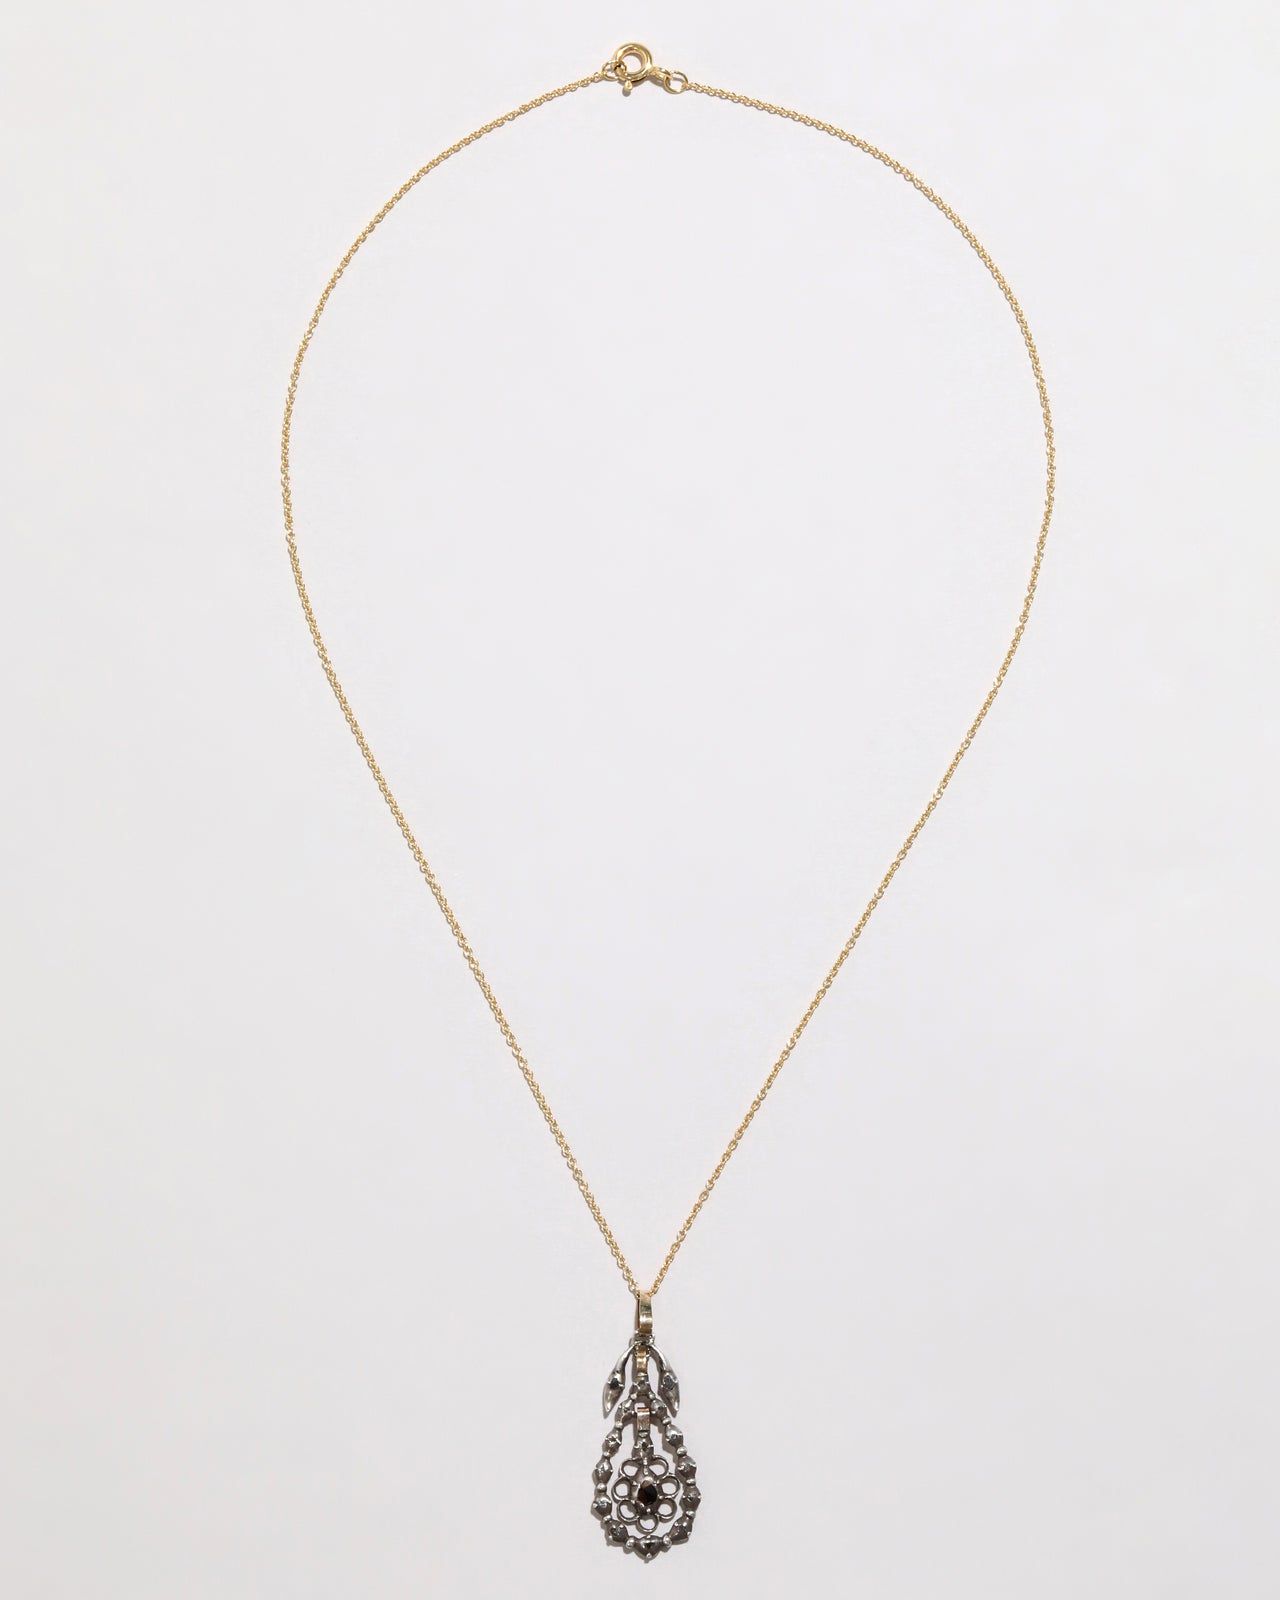 Antique 1800s Sterling Silver & Diamond Pendant Necklace - Photo 2